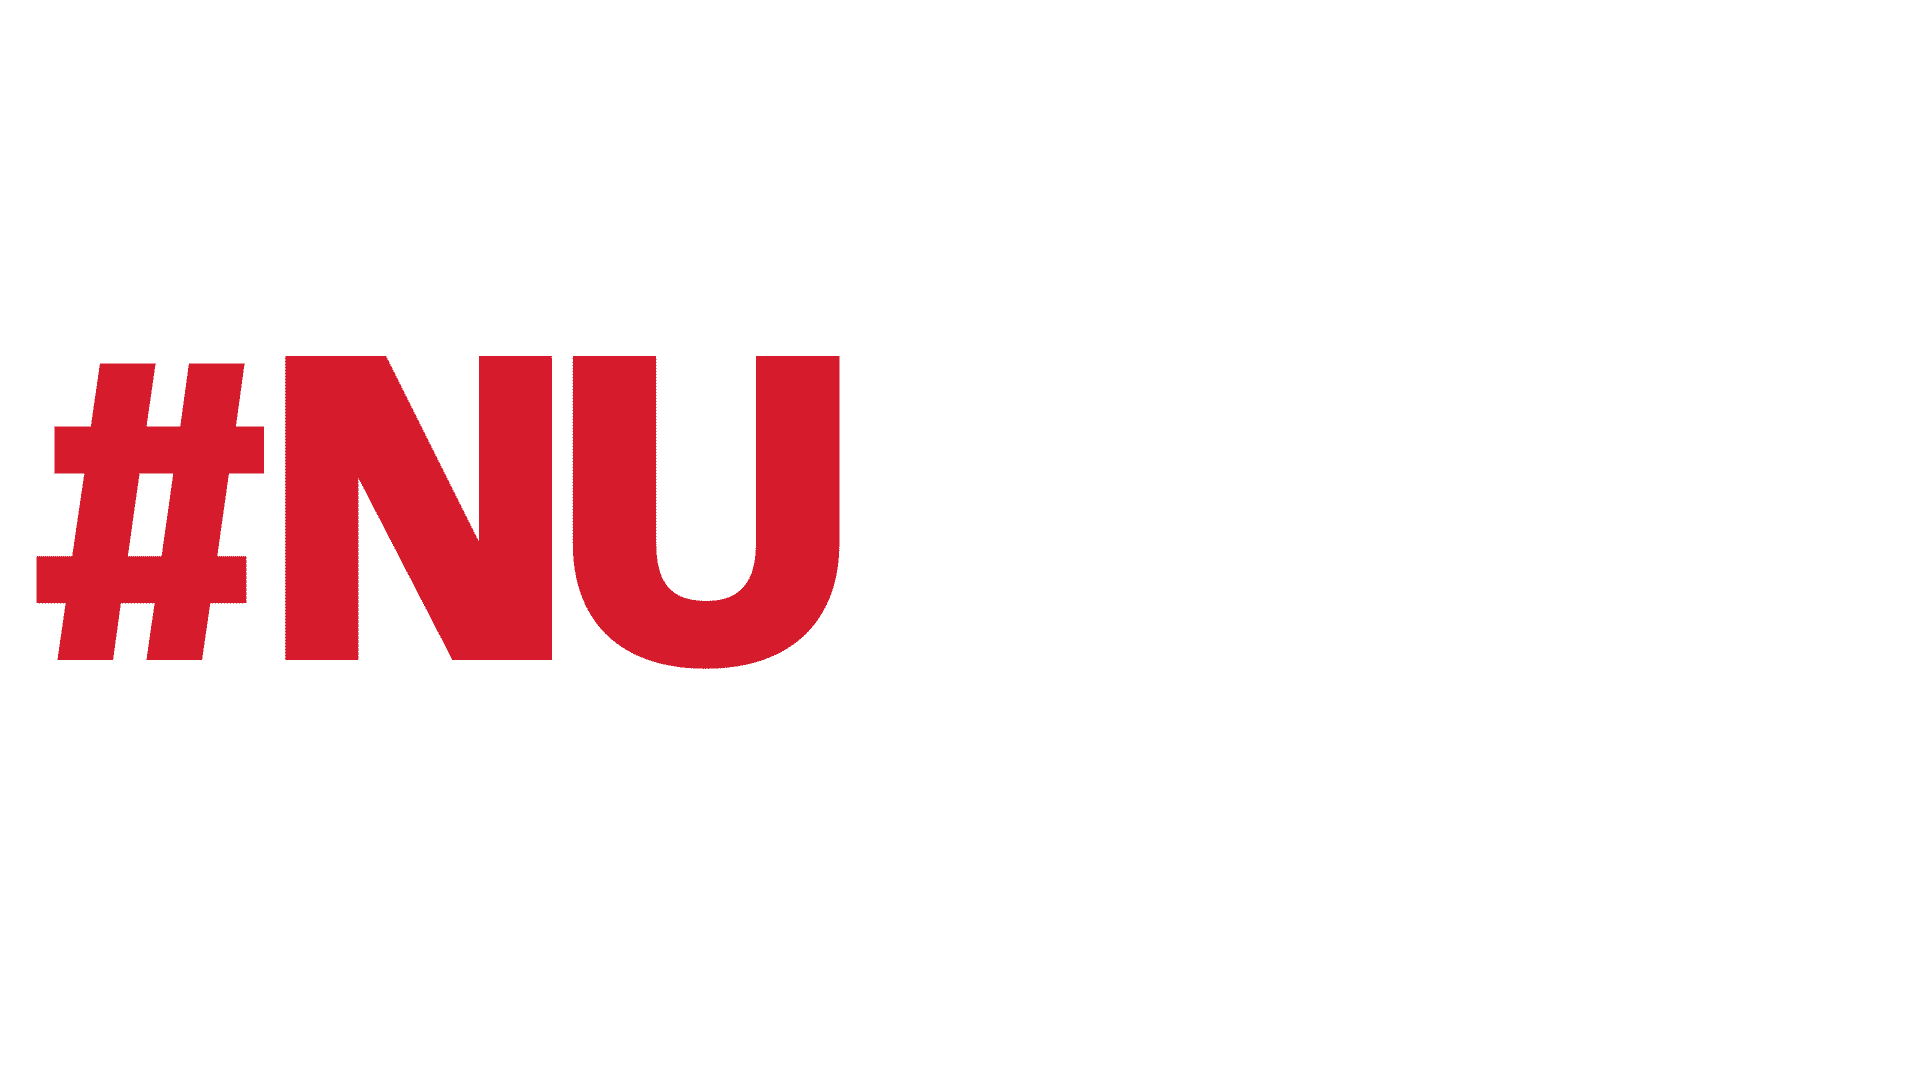 Nu2022 Sticker by Northeastern University